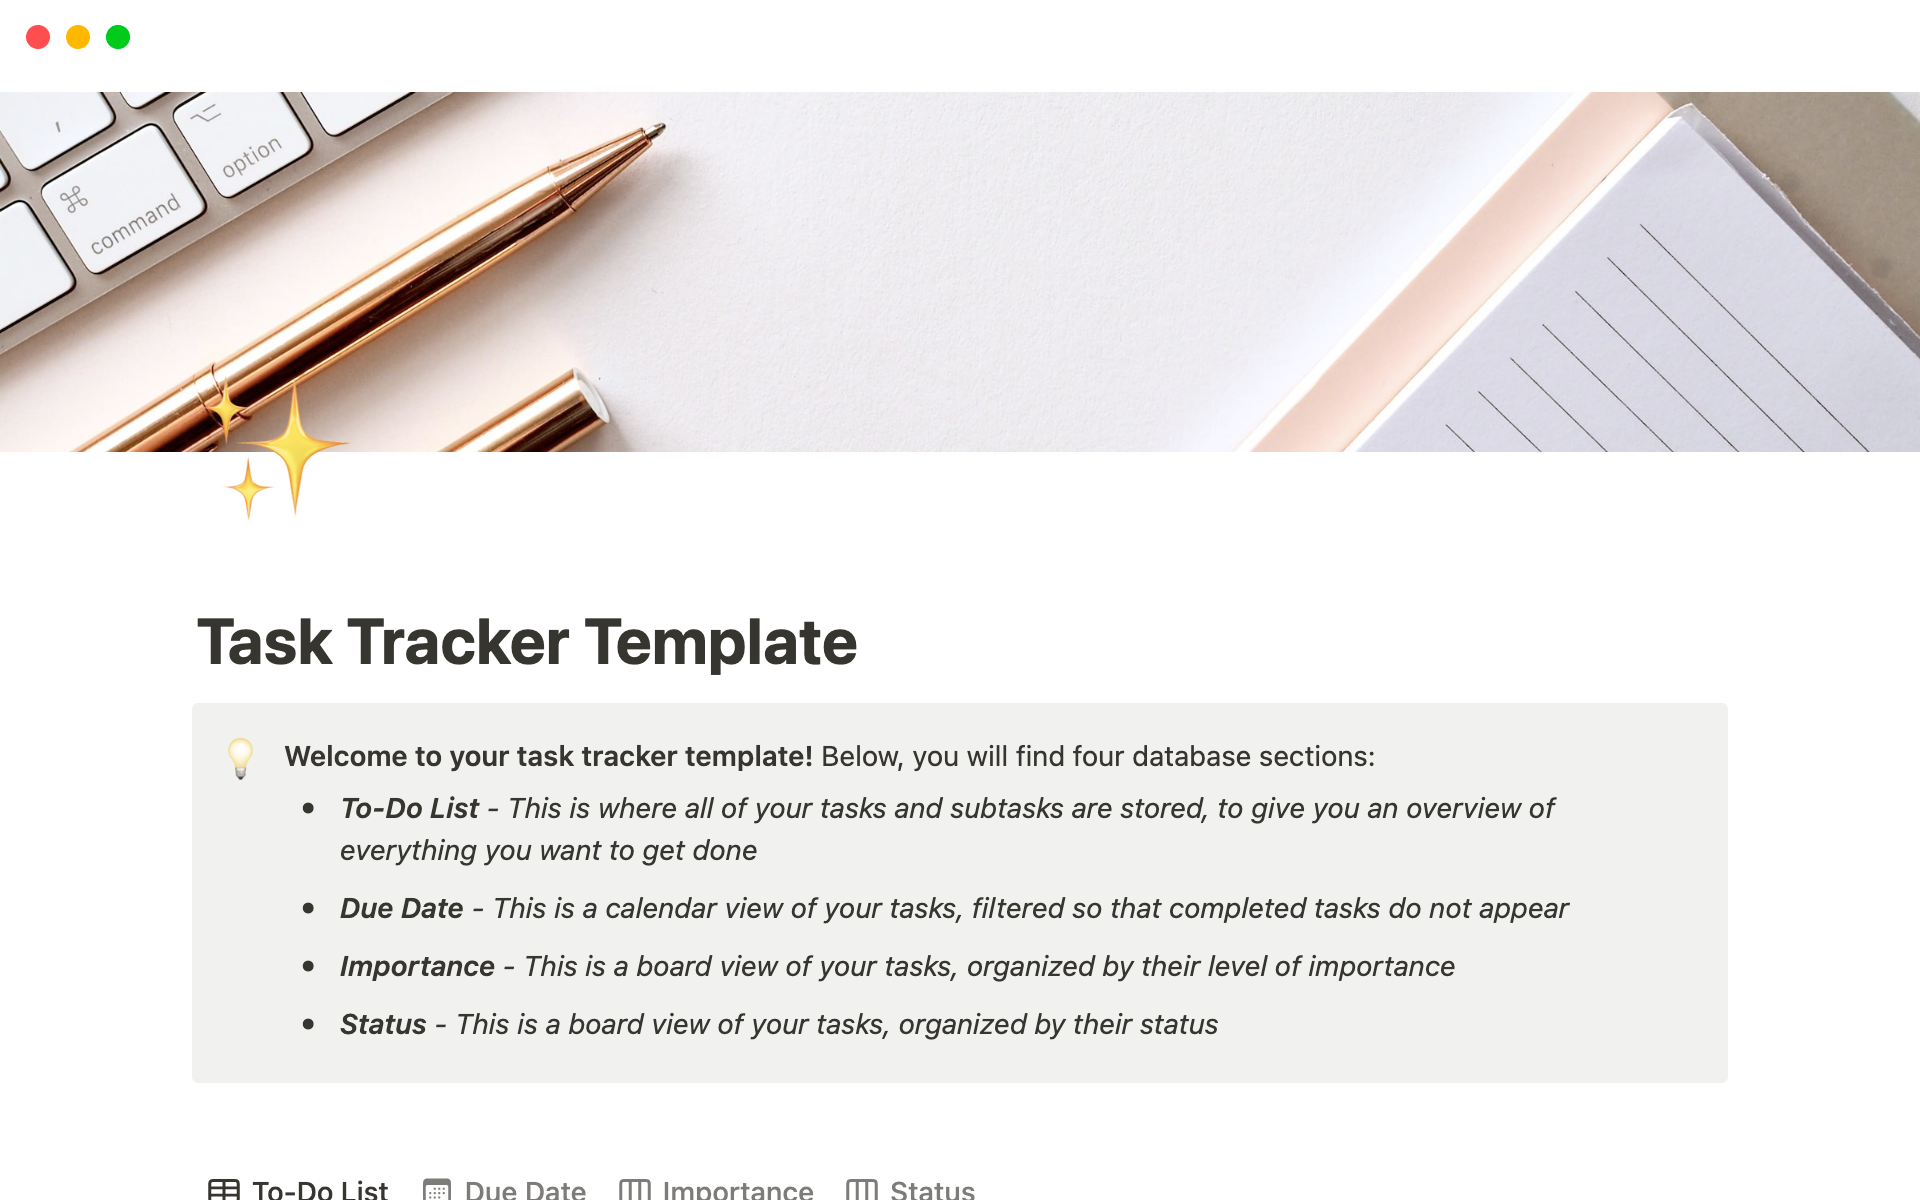 Task tracker templates